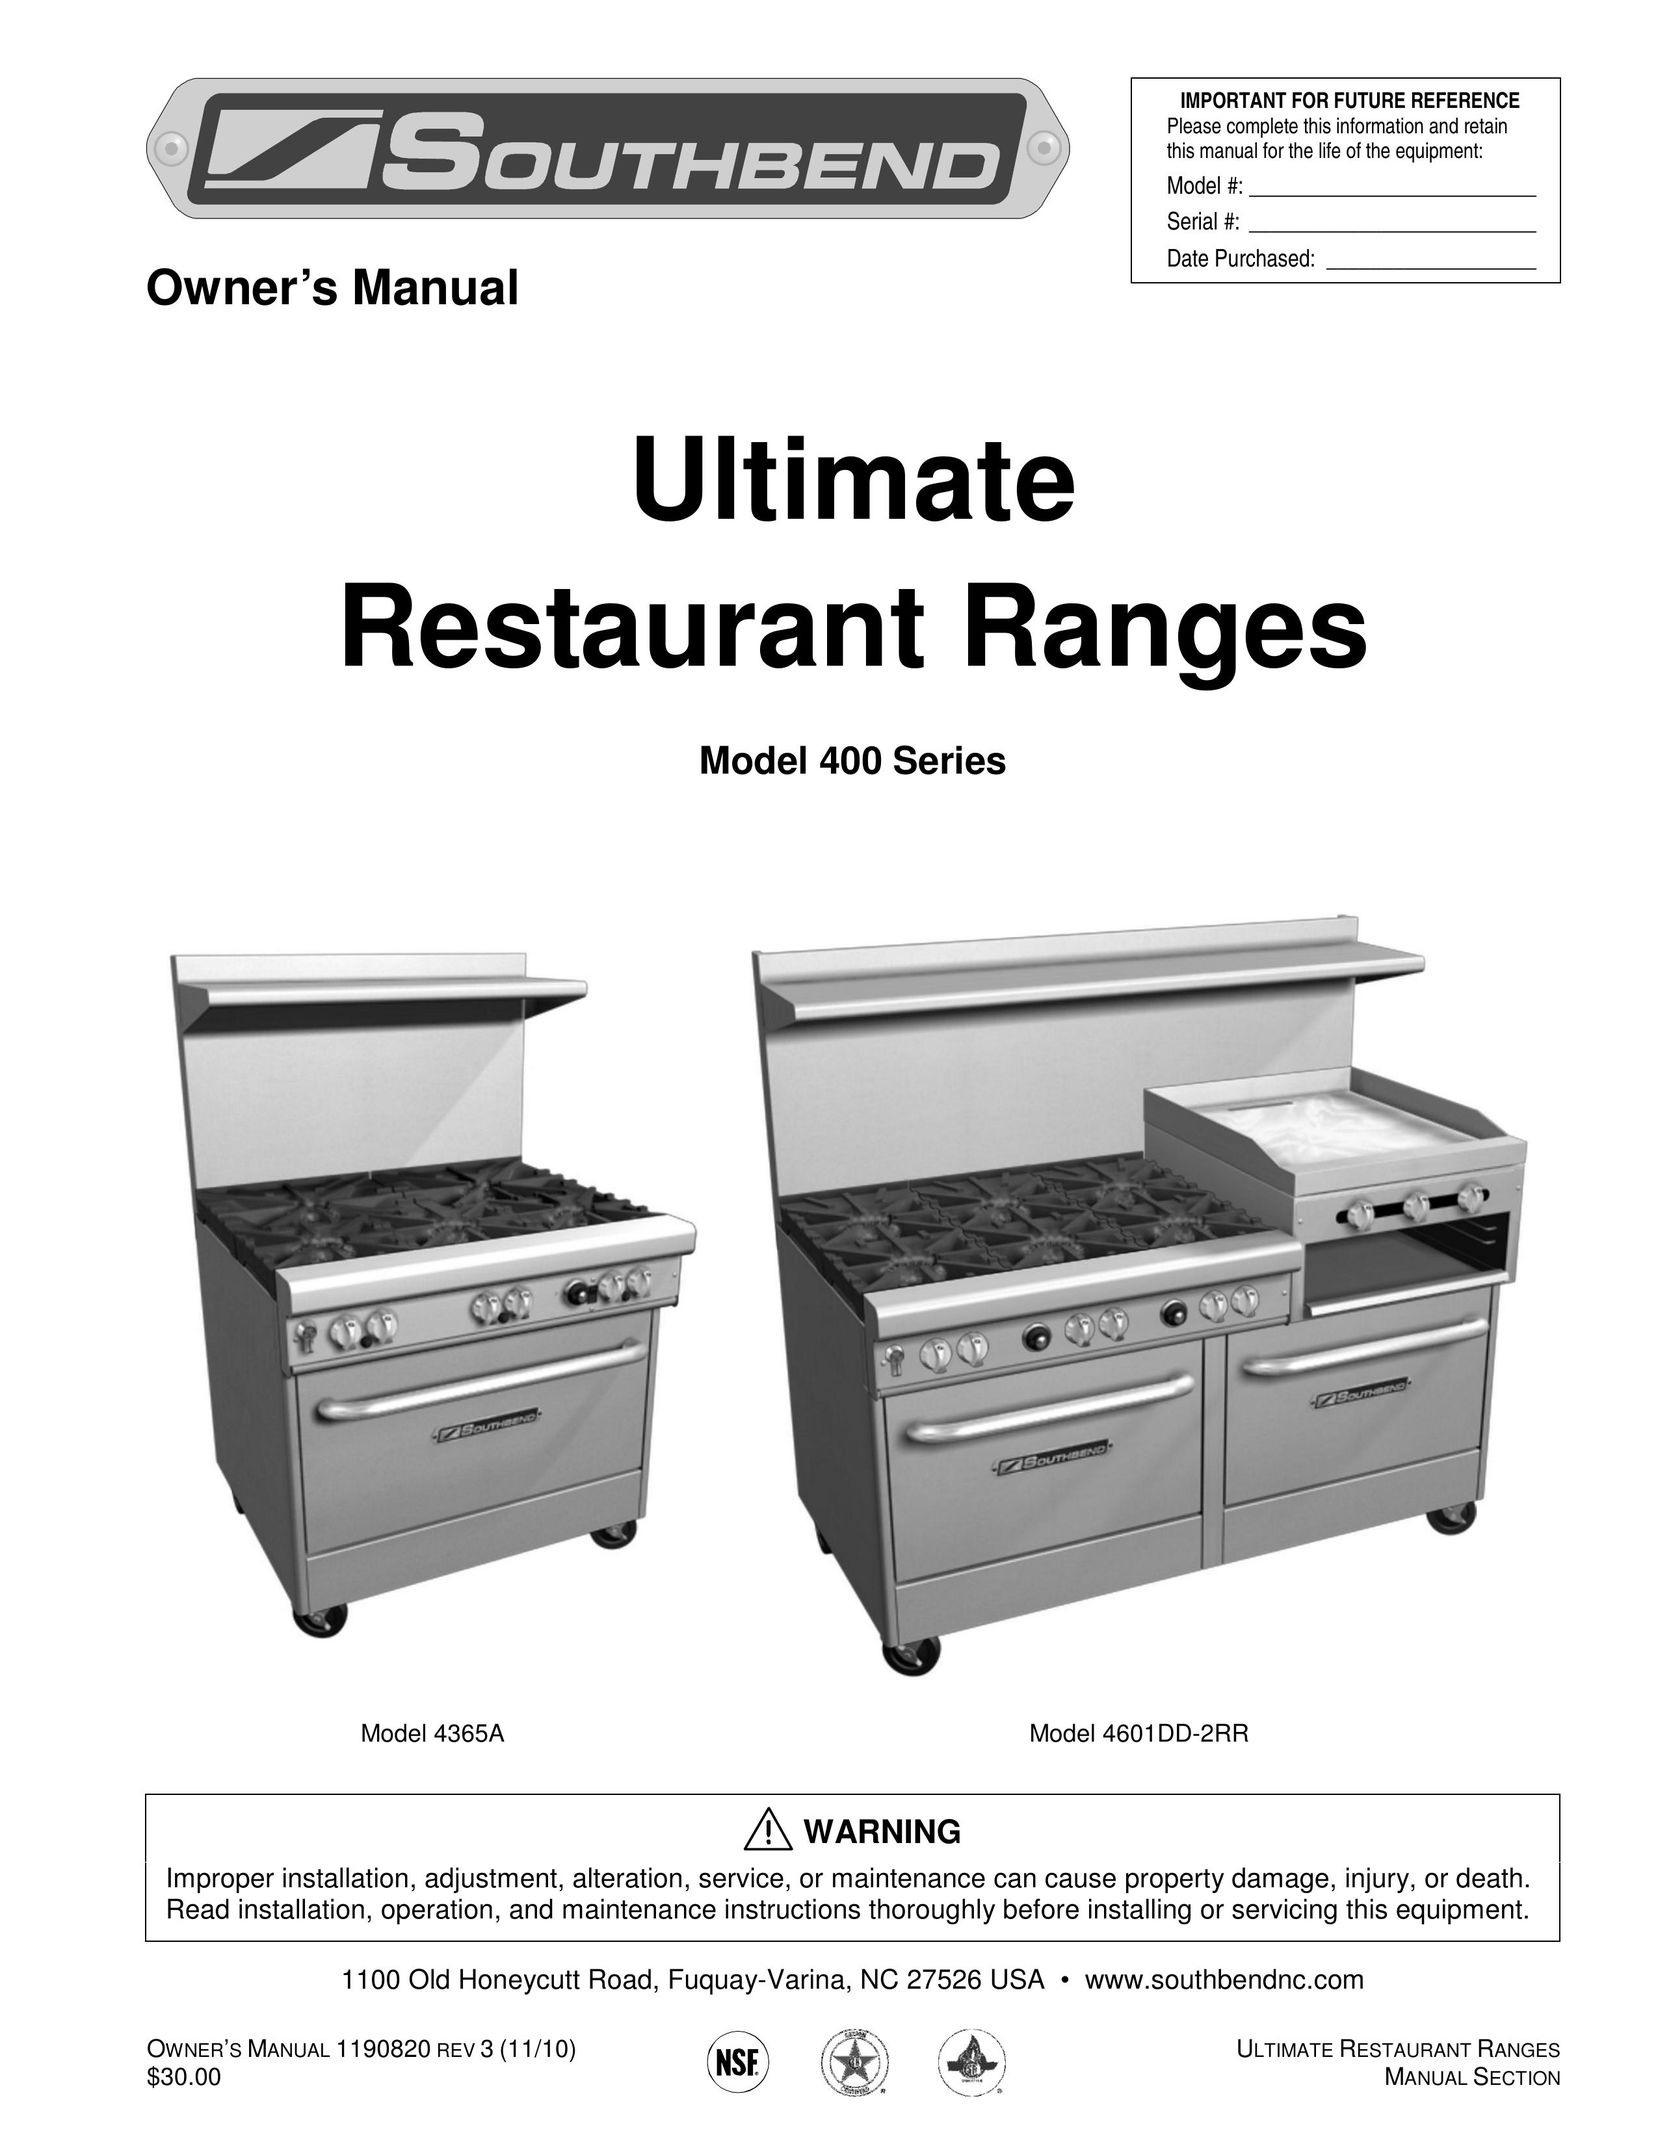 Southbend 4365A Range User Manual